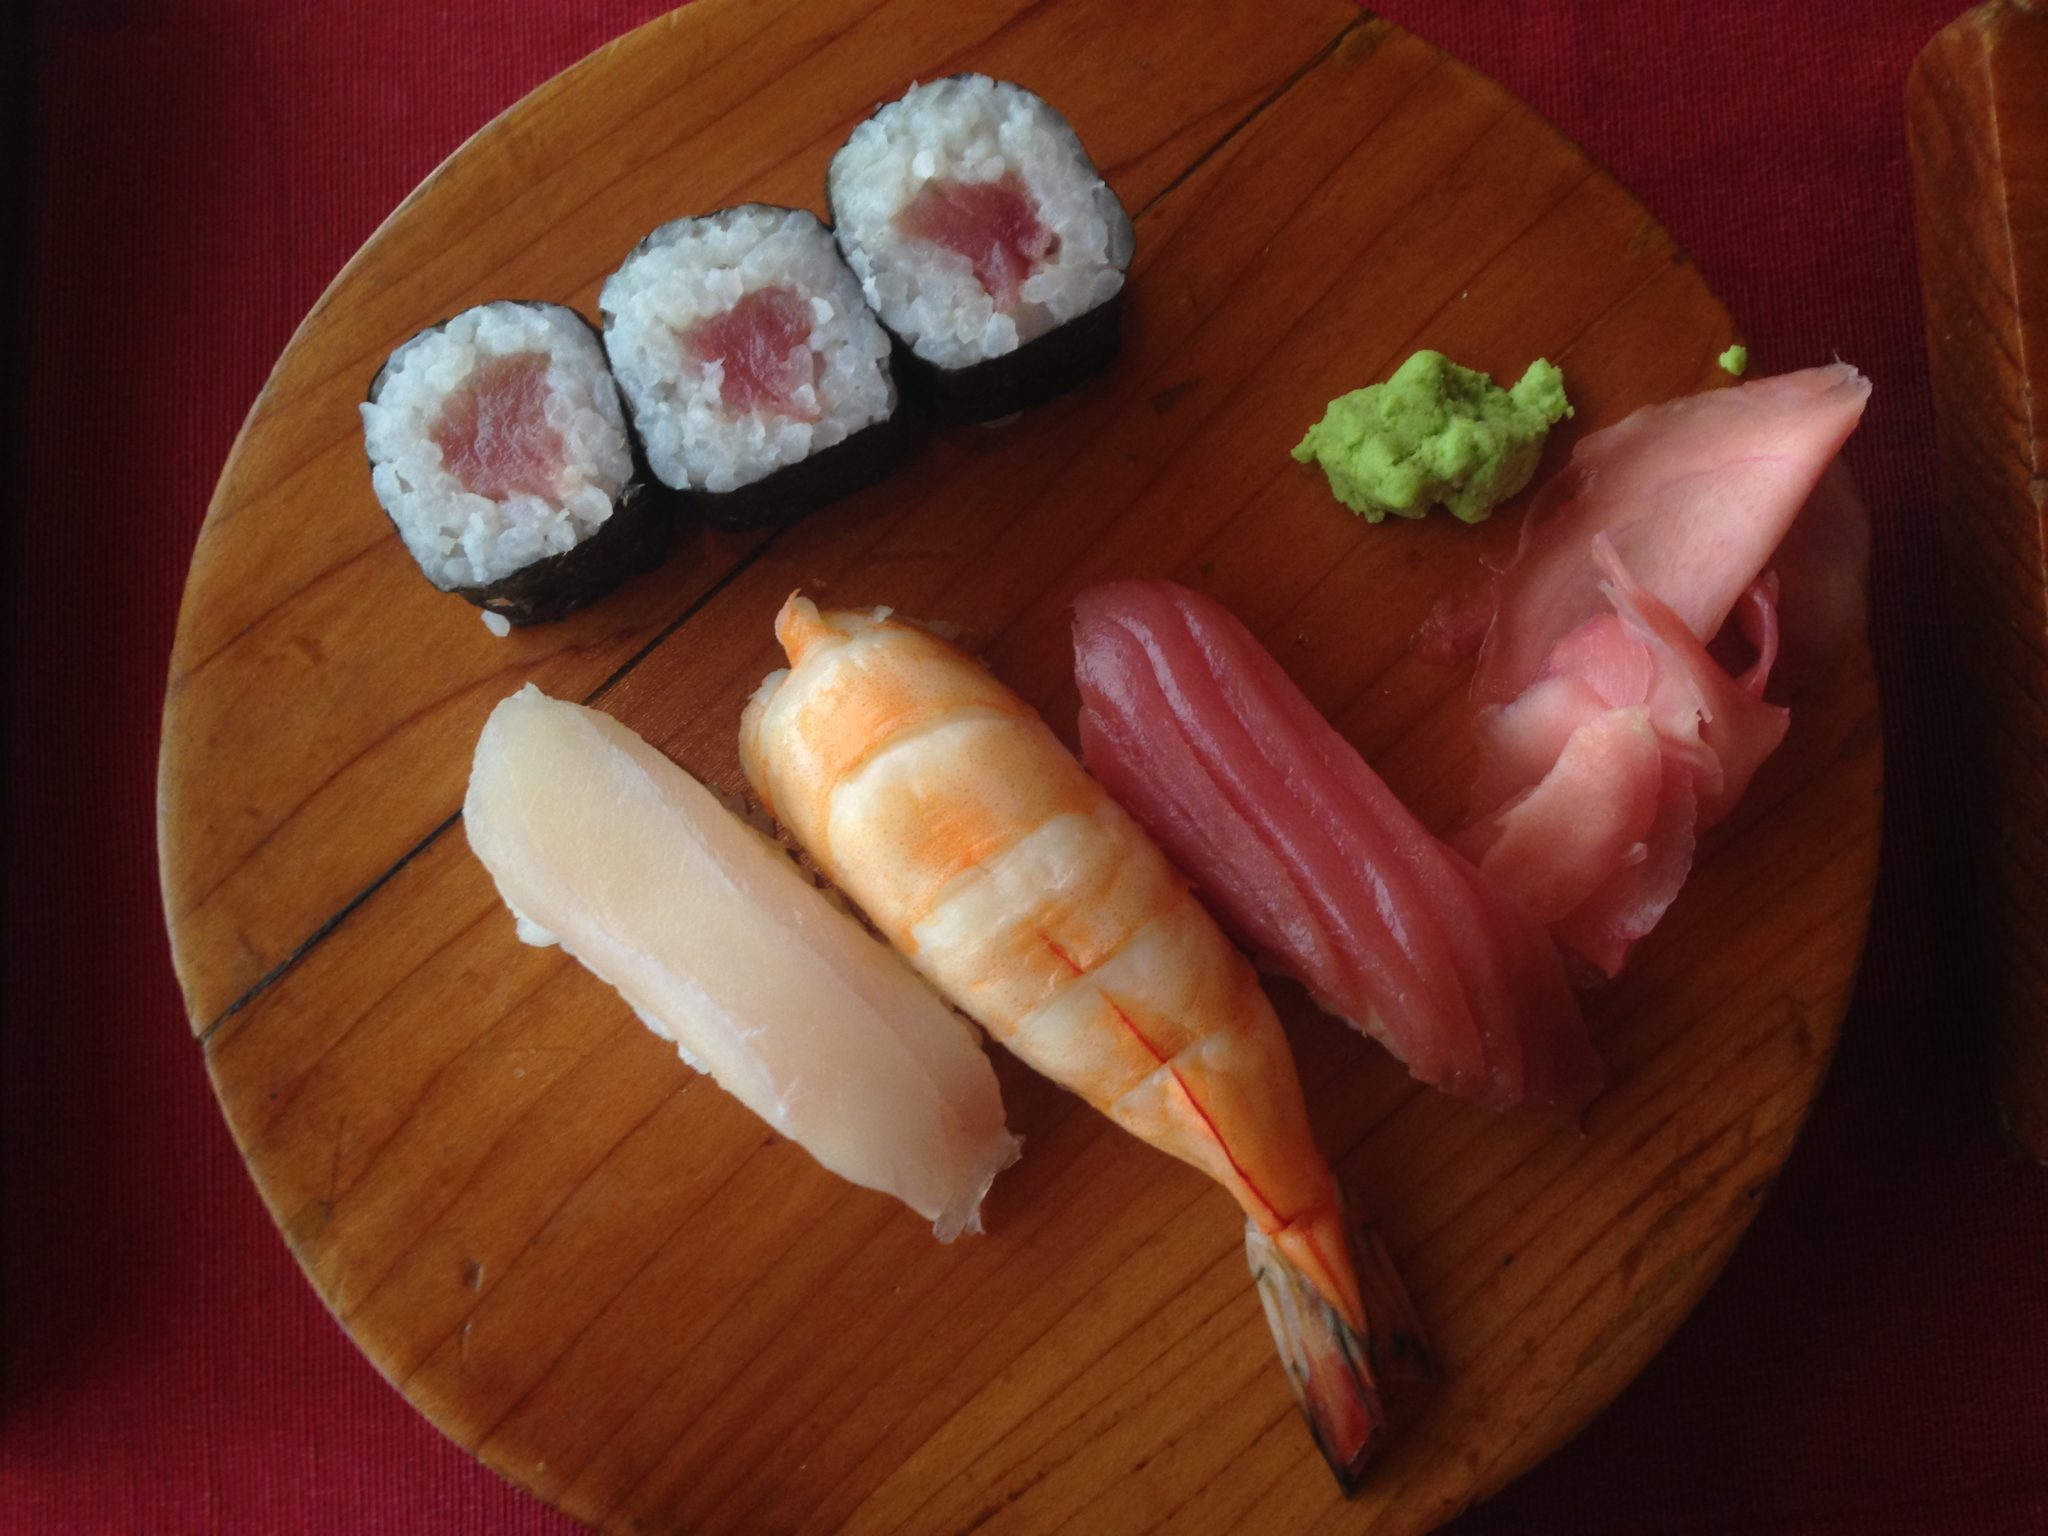 Sushi Moriawase plate, including tuna roll and nigiri, at Fujiyama